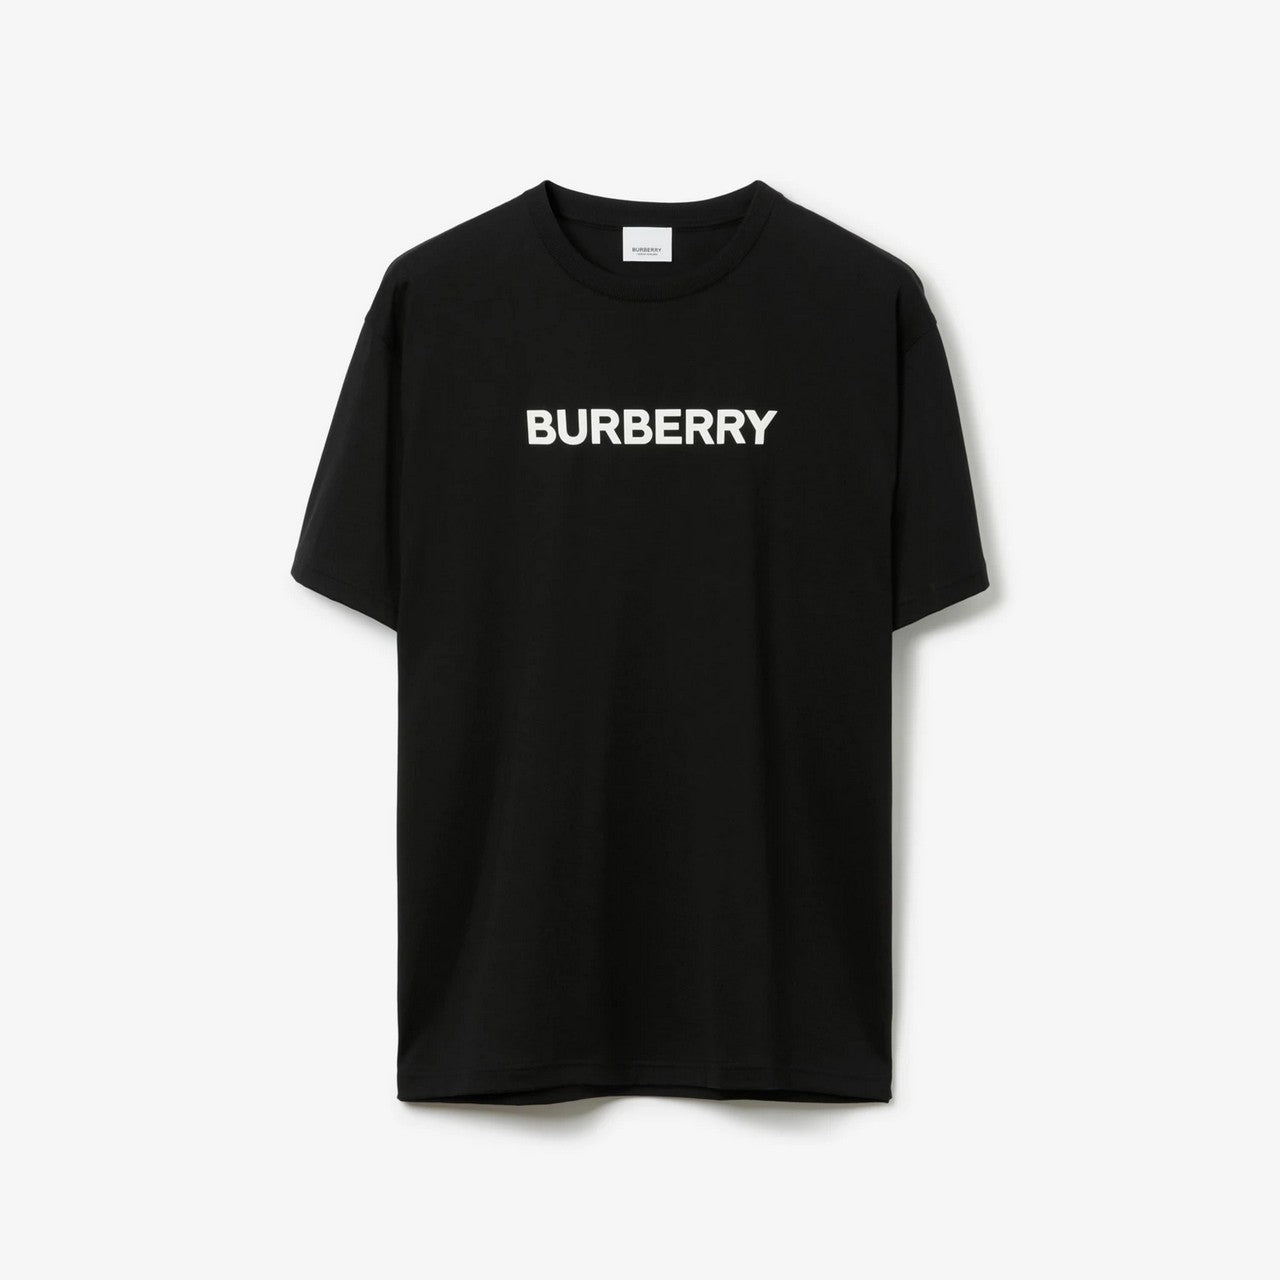 T-shirt Burberry 80553091001 jersey di cotone scritta Burberry stampata